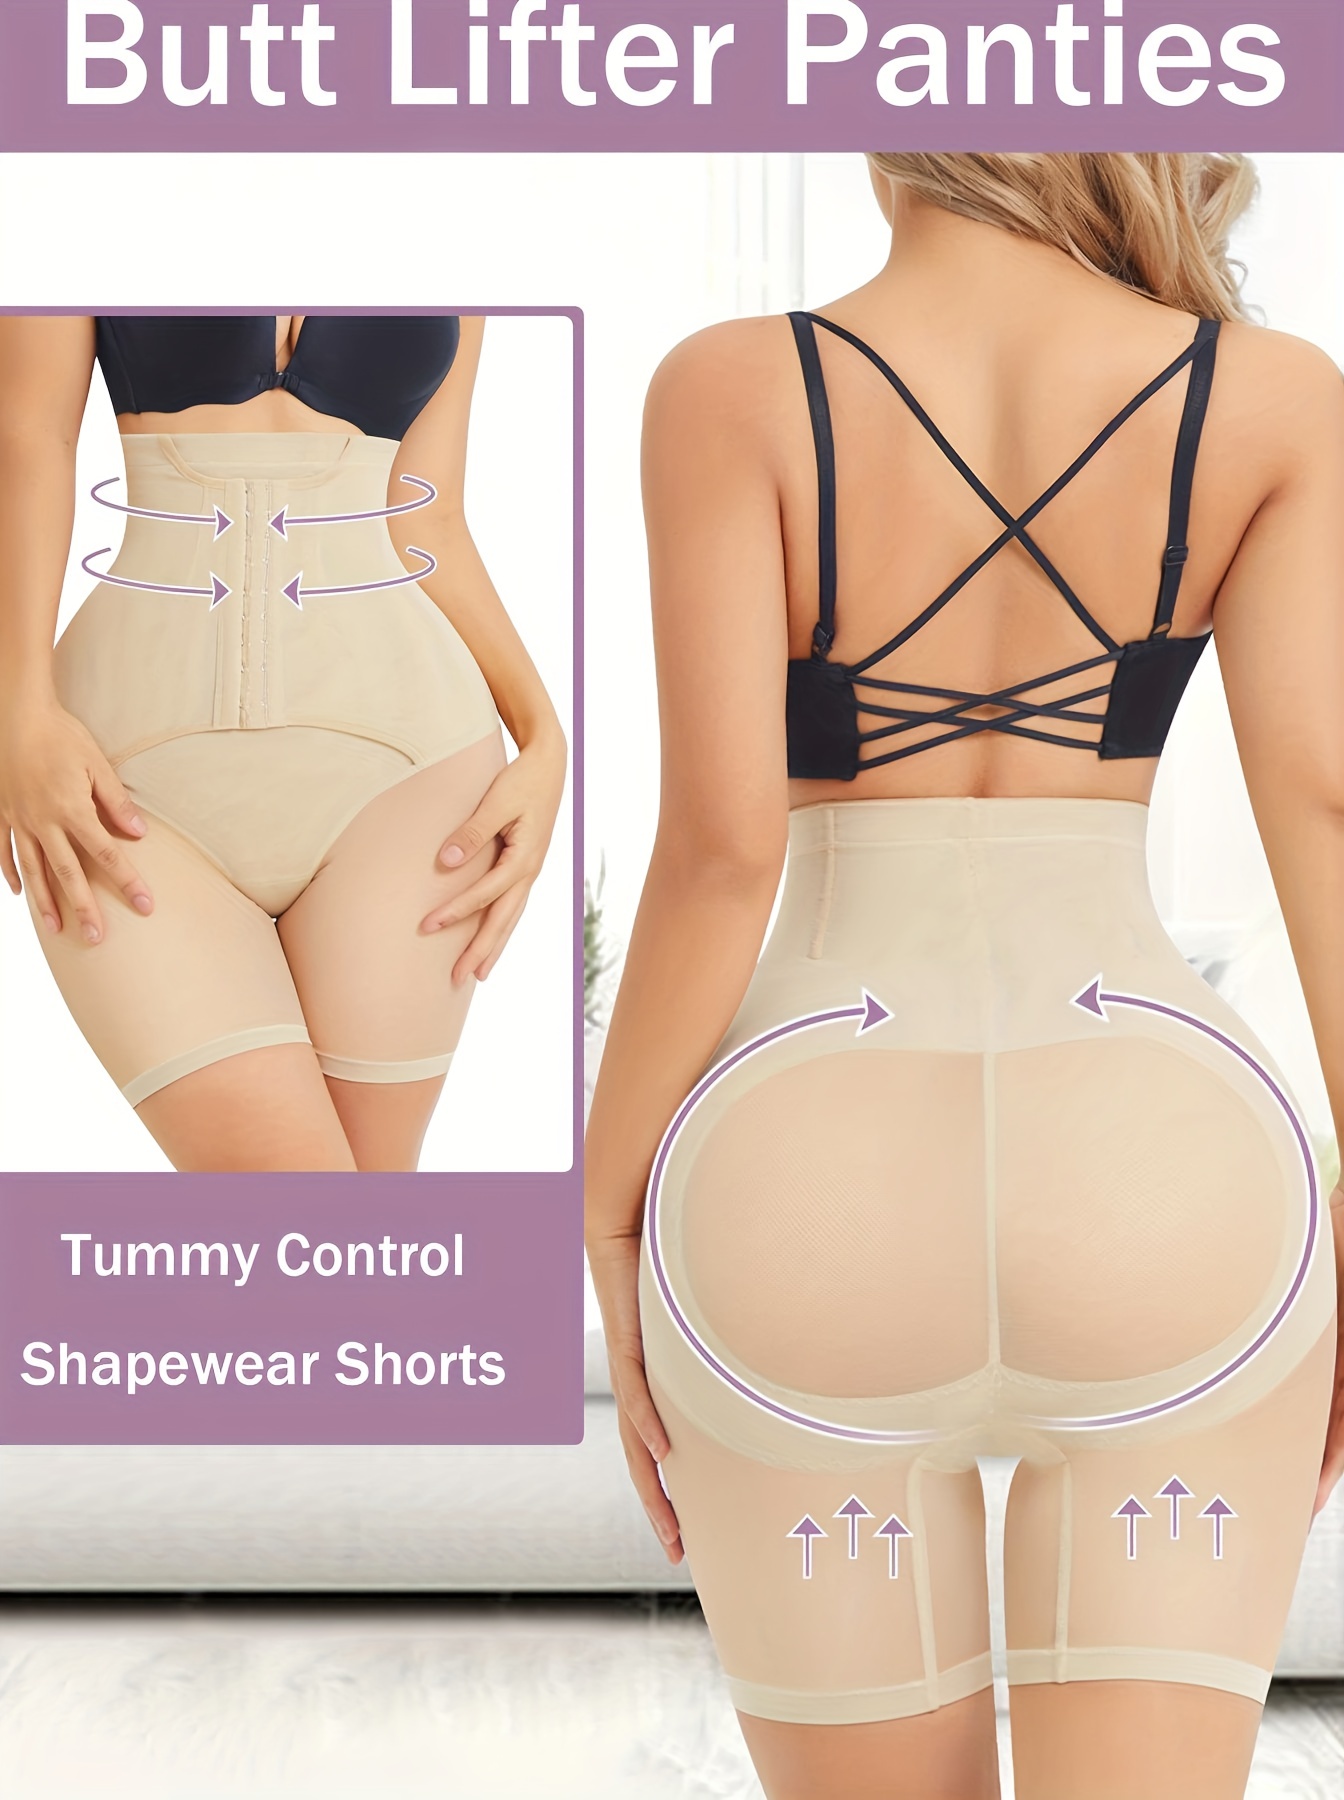 Tummy Control Shaping Shorts For Women, Waist Training Shorts Butt Lifting  Thigh Slimming Shorts, Women's Activewear